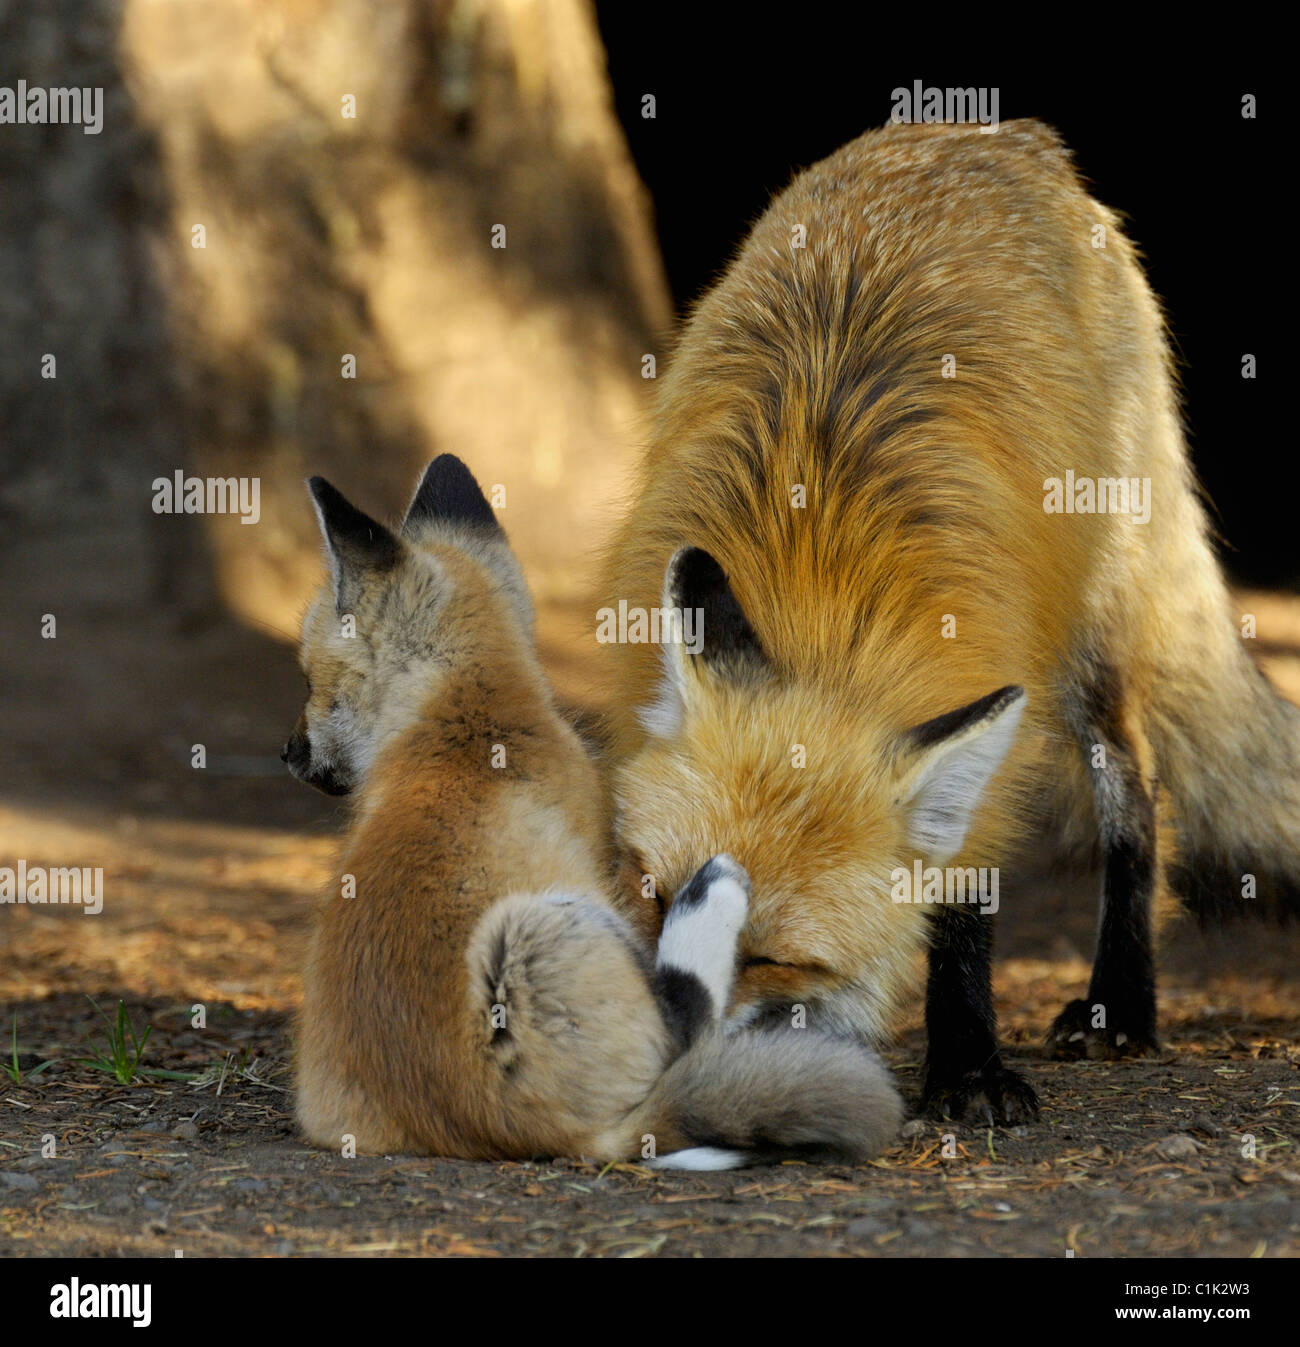 Mother fox grooming her baby. Stock Photo